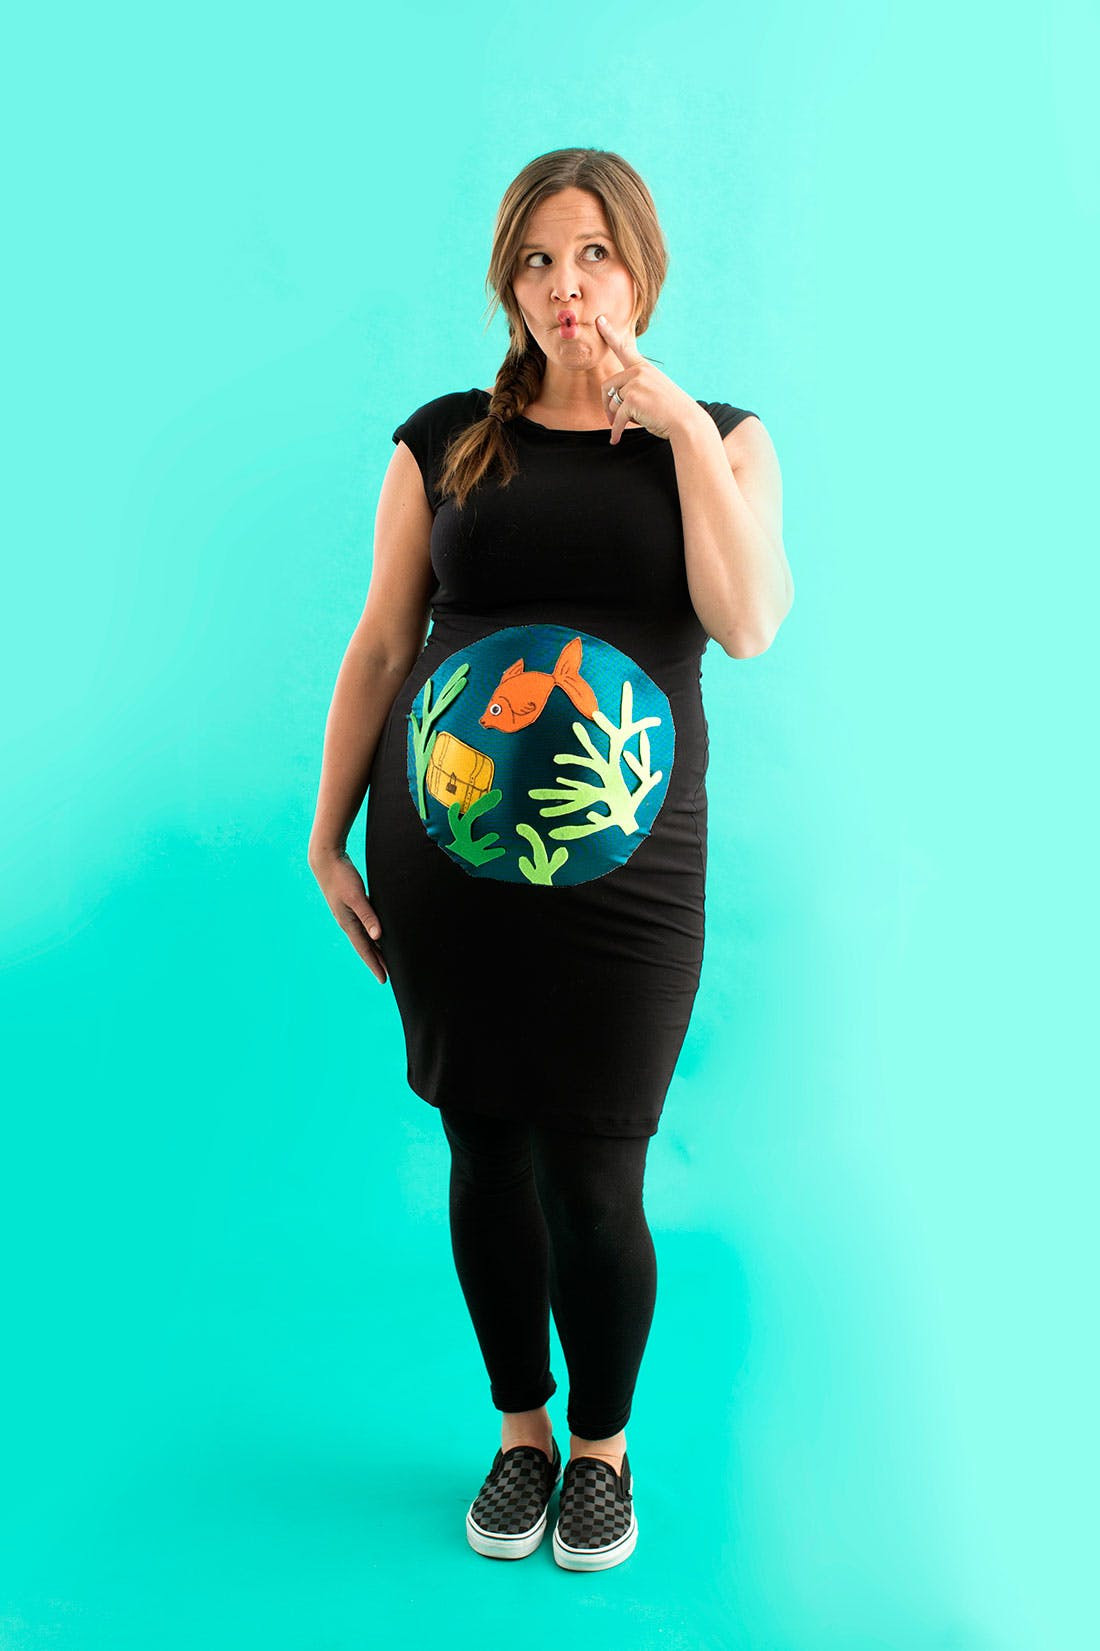 DIY Pregnant Costume
 10 DIY Maternity Halloween Costume Ideas for Pregnant